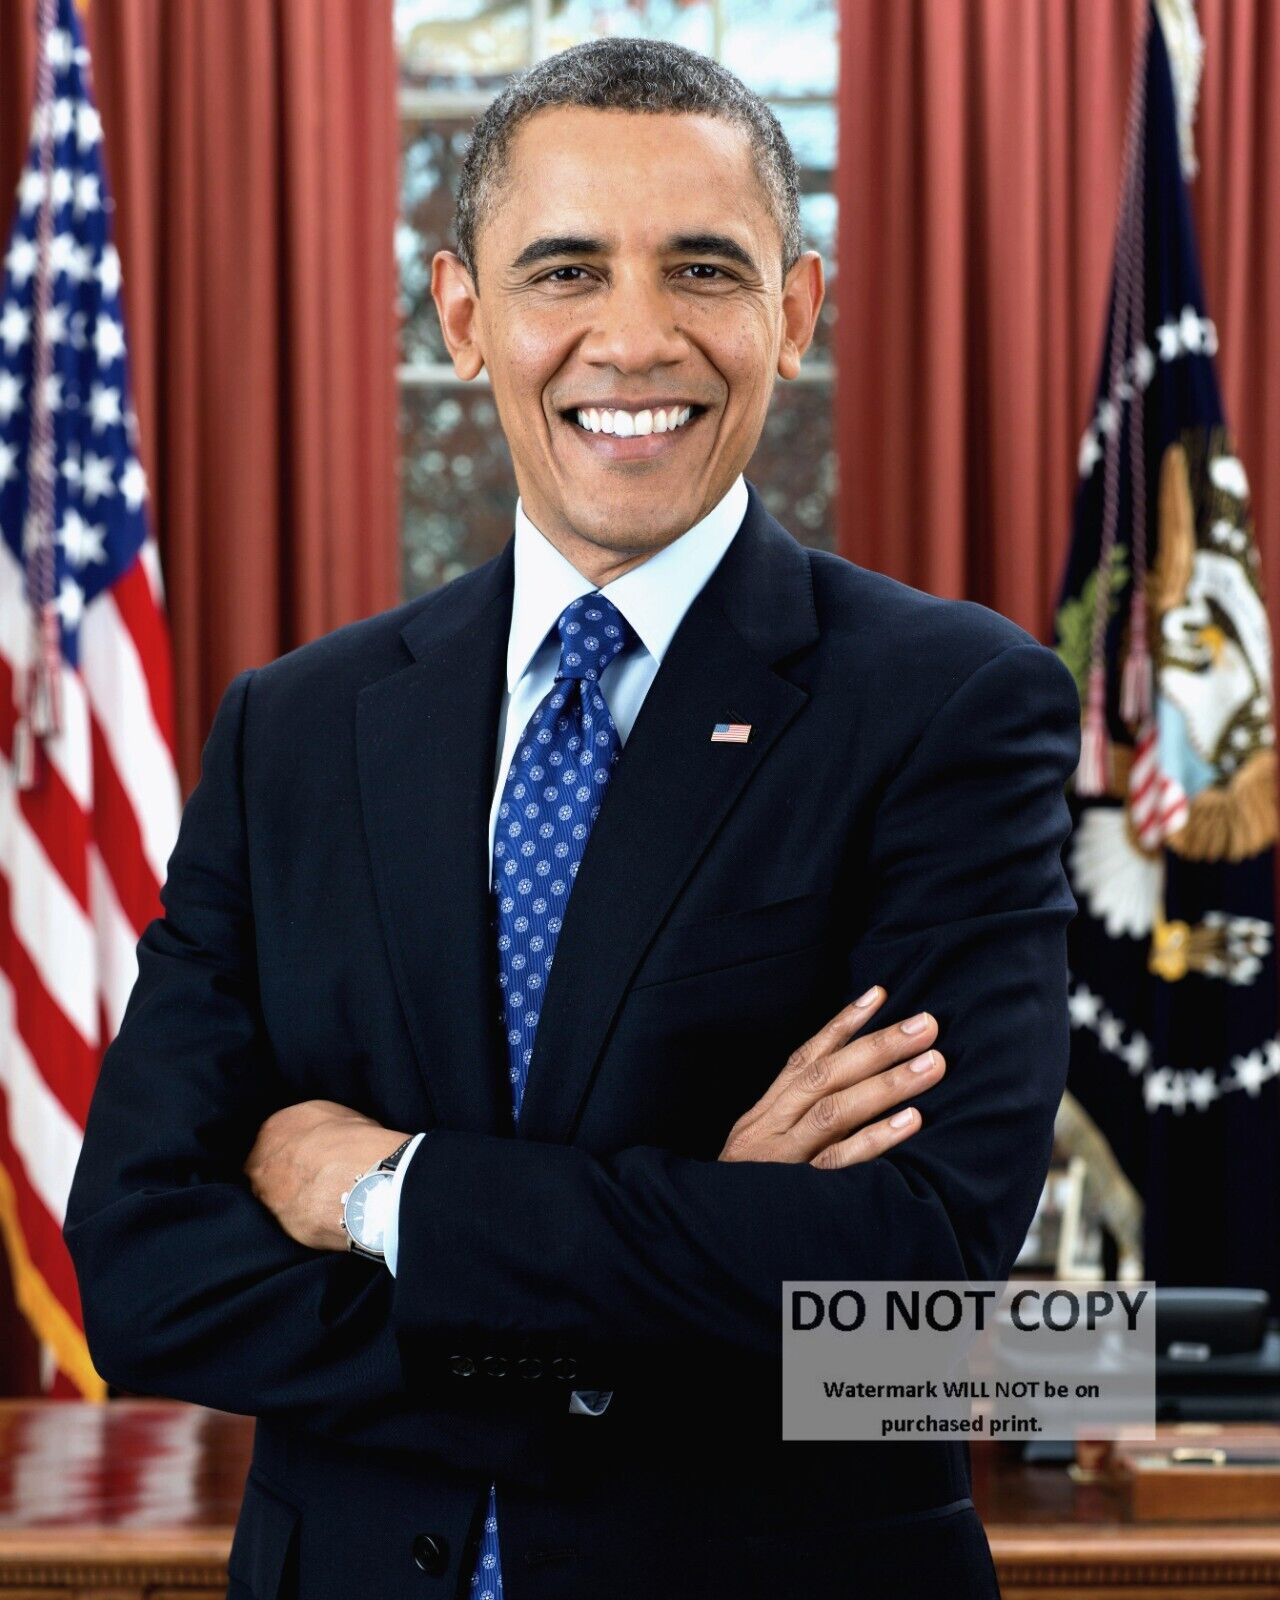 PRESIDENT BARACK OBAMA 44TH PRESIDENT OF THE UNITED STATES - 8X10 PHOTO (AA-770)